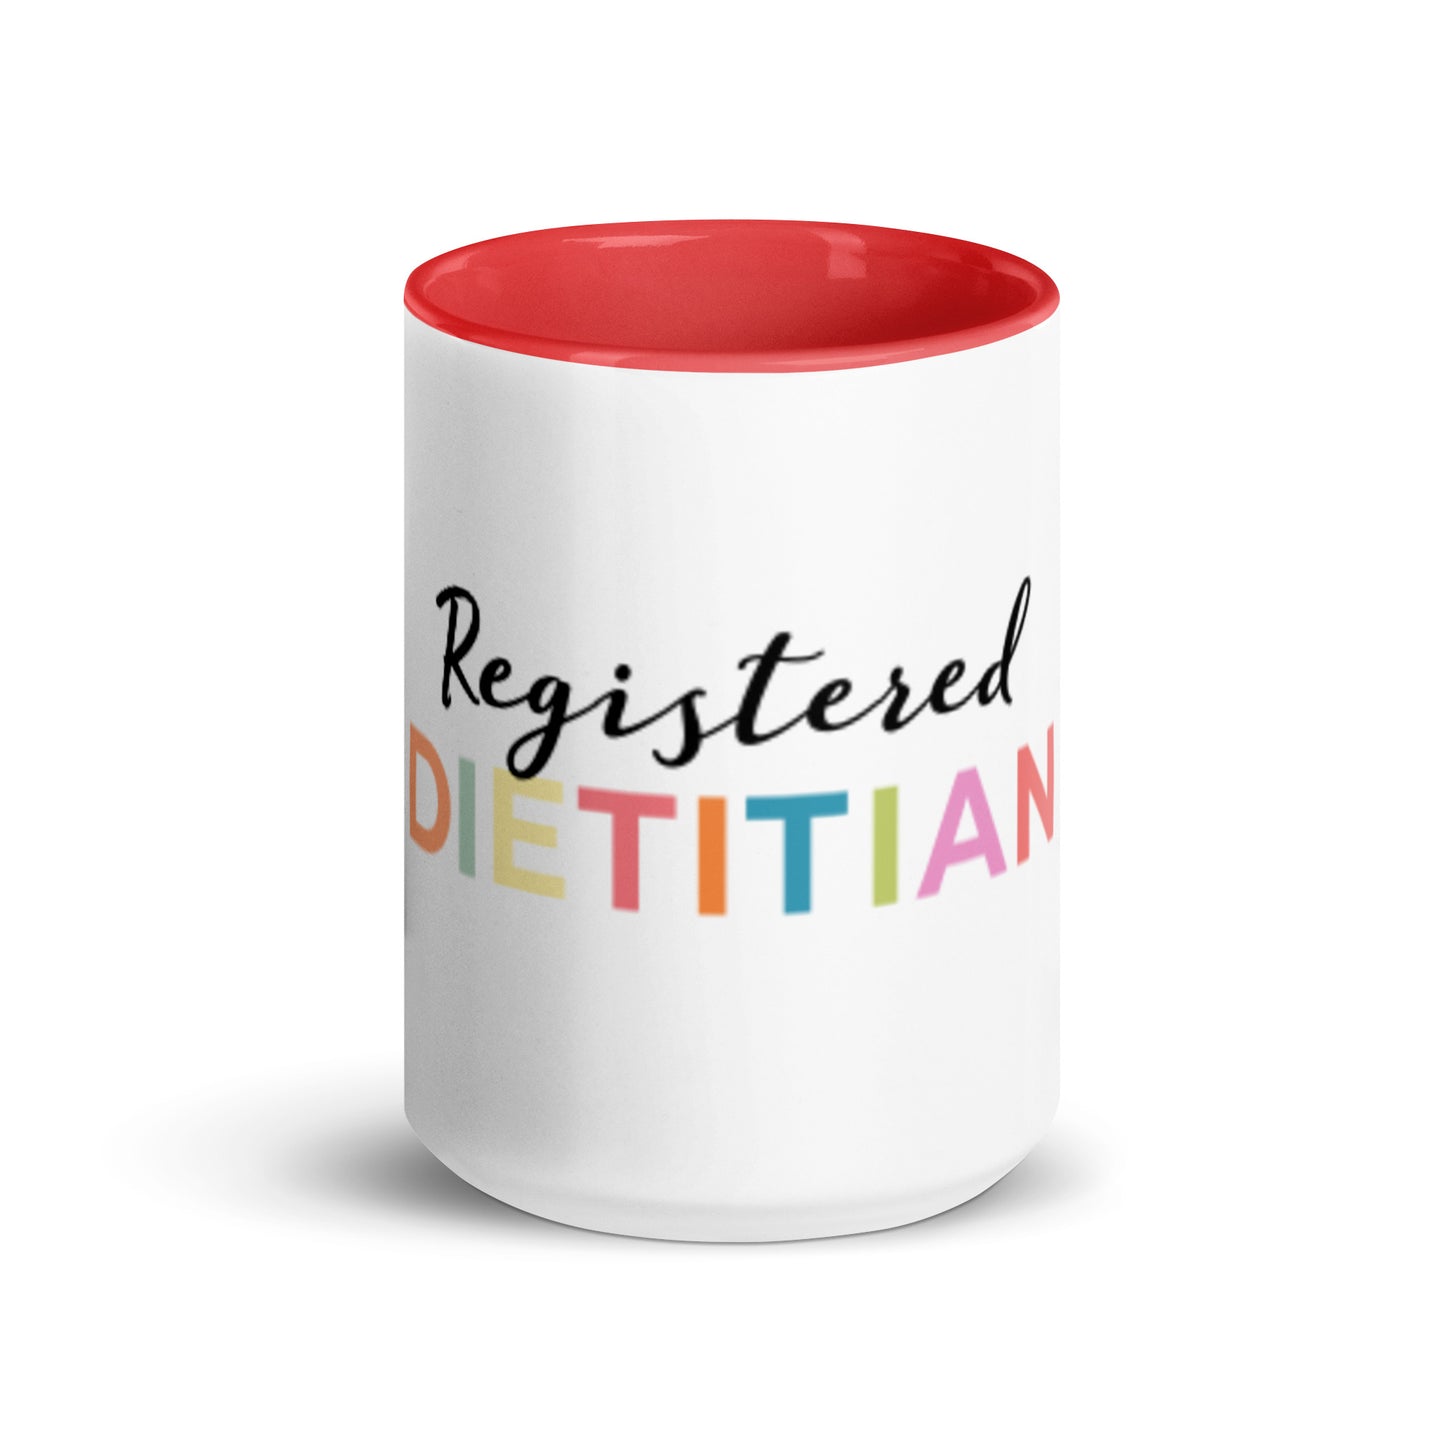 Registered Dietitian Mug with Color Inside